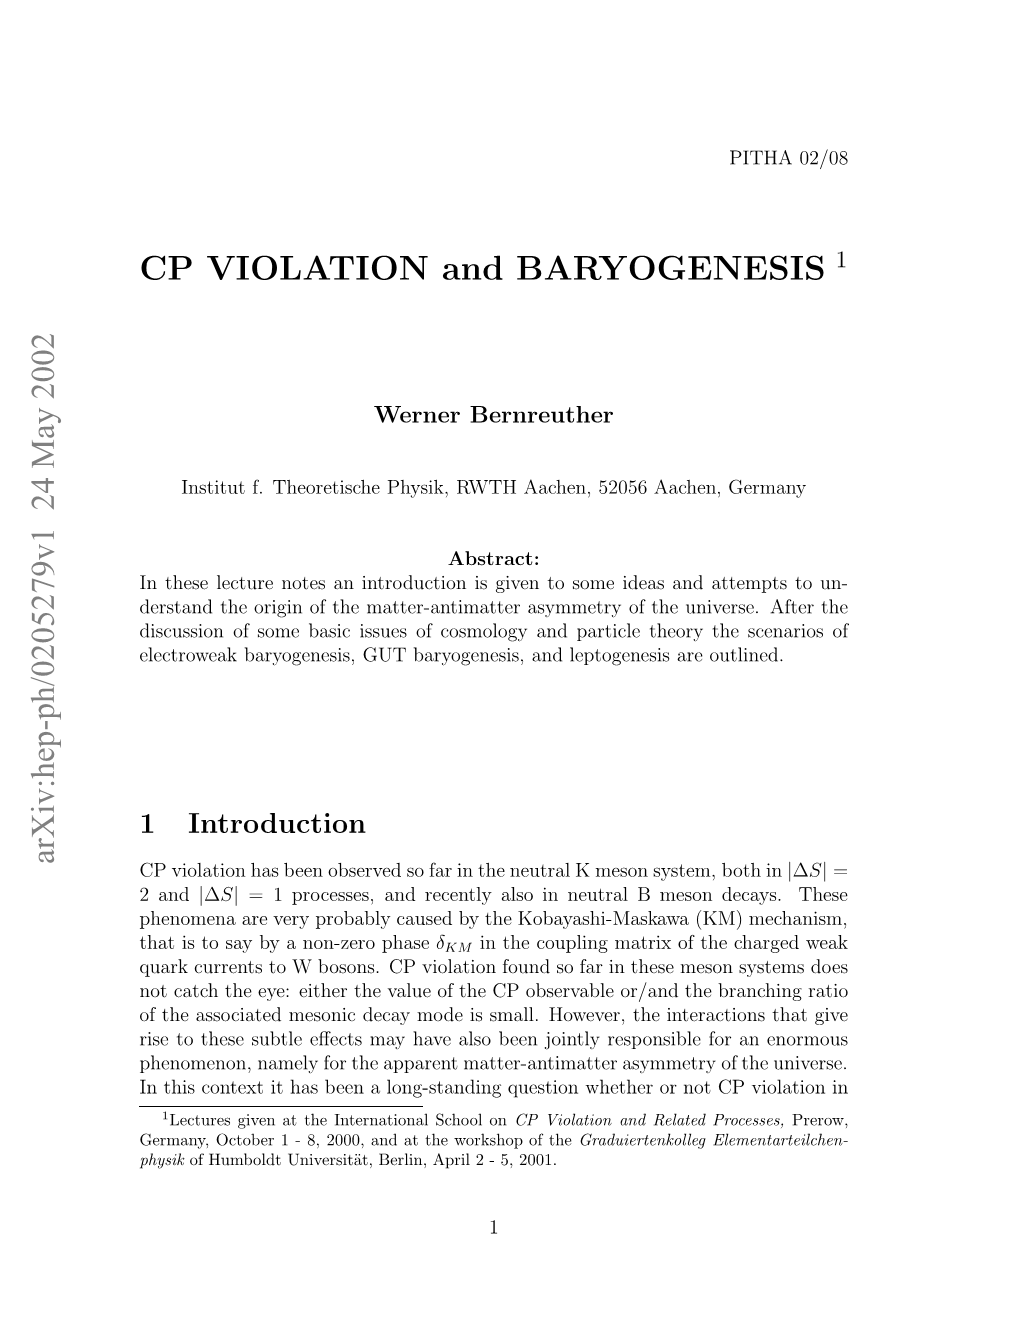 CP Violation and Baryogenesis